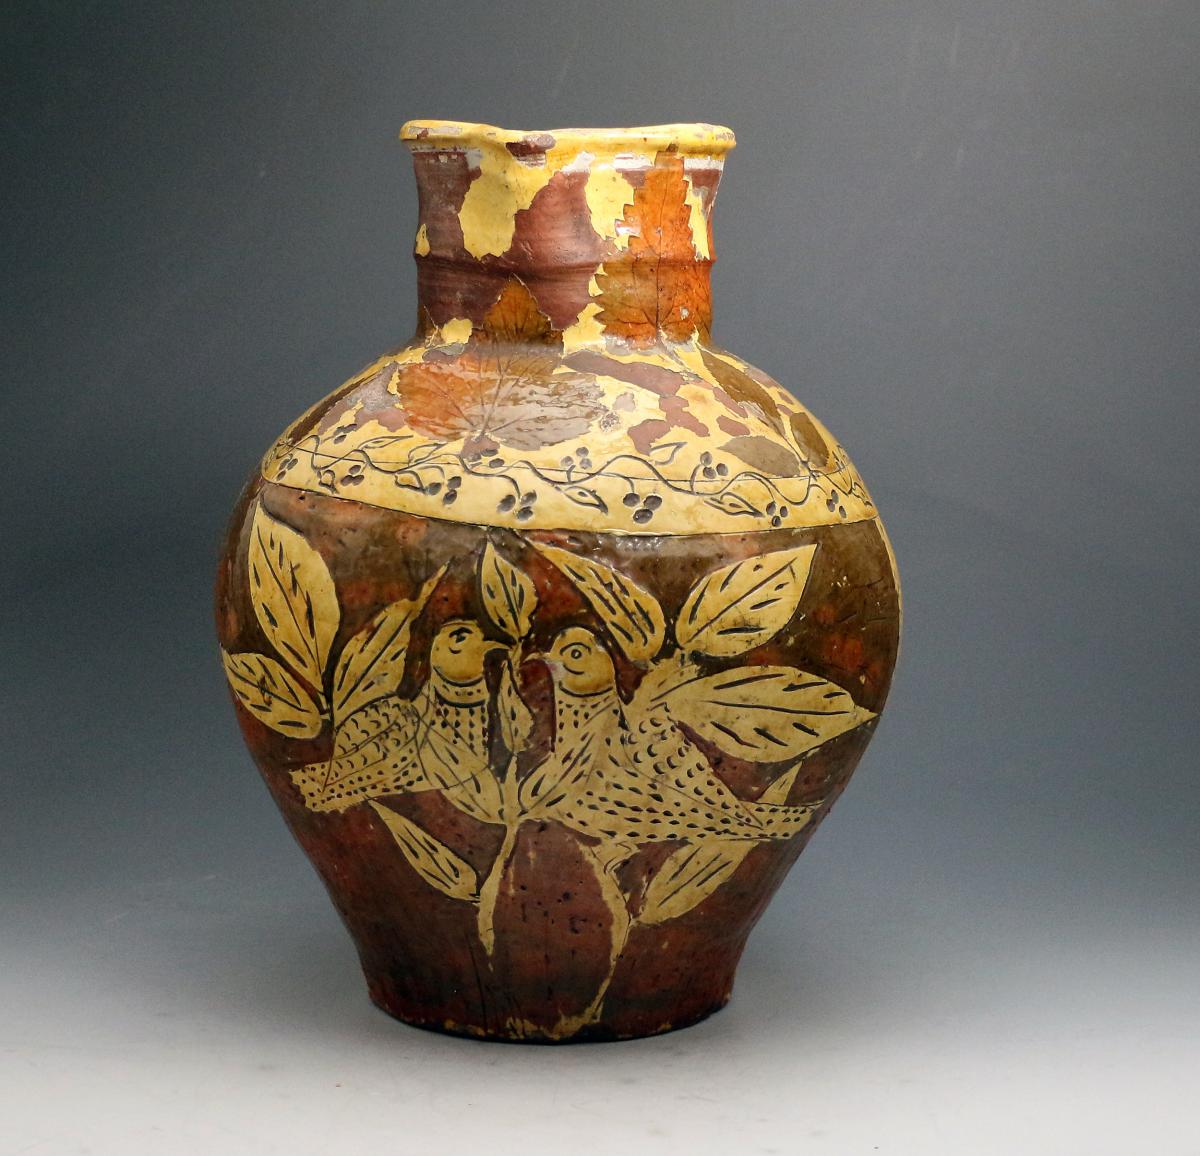 Slipware pottery harvest jug made by George Fishley at the Fremington Devon Pottery